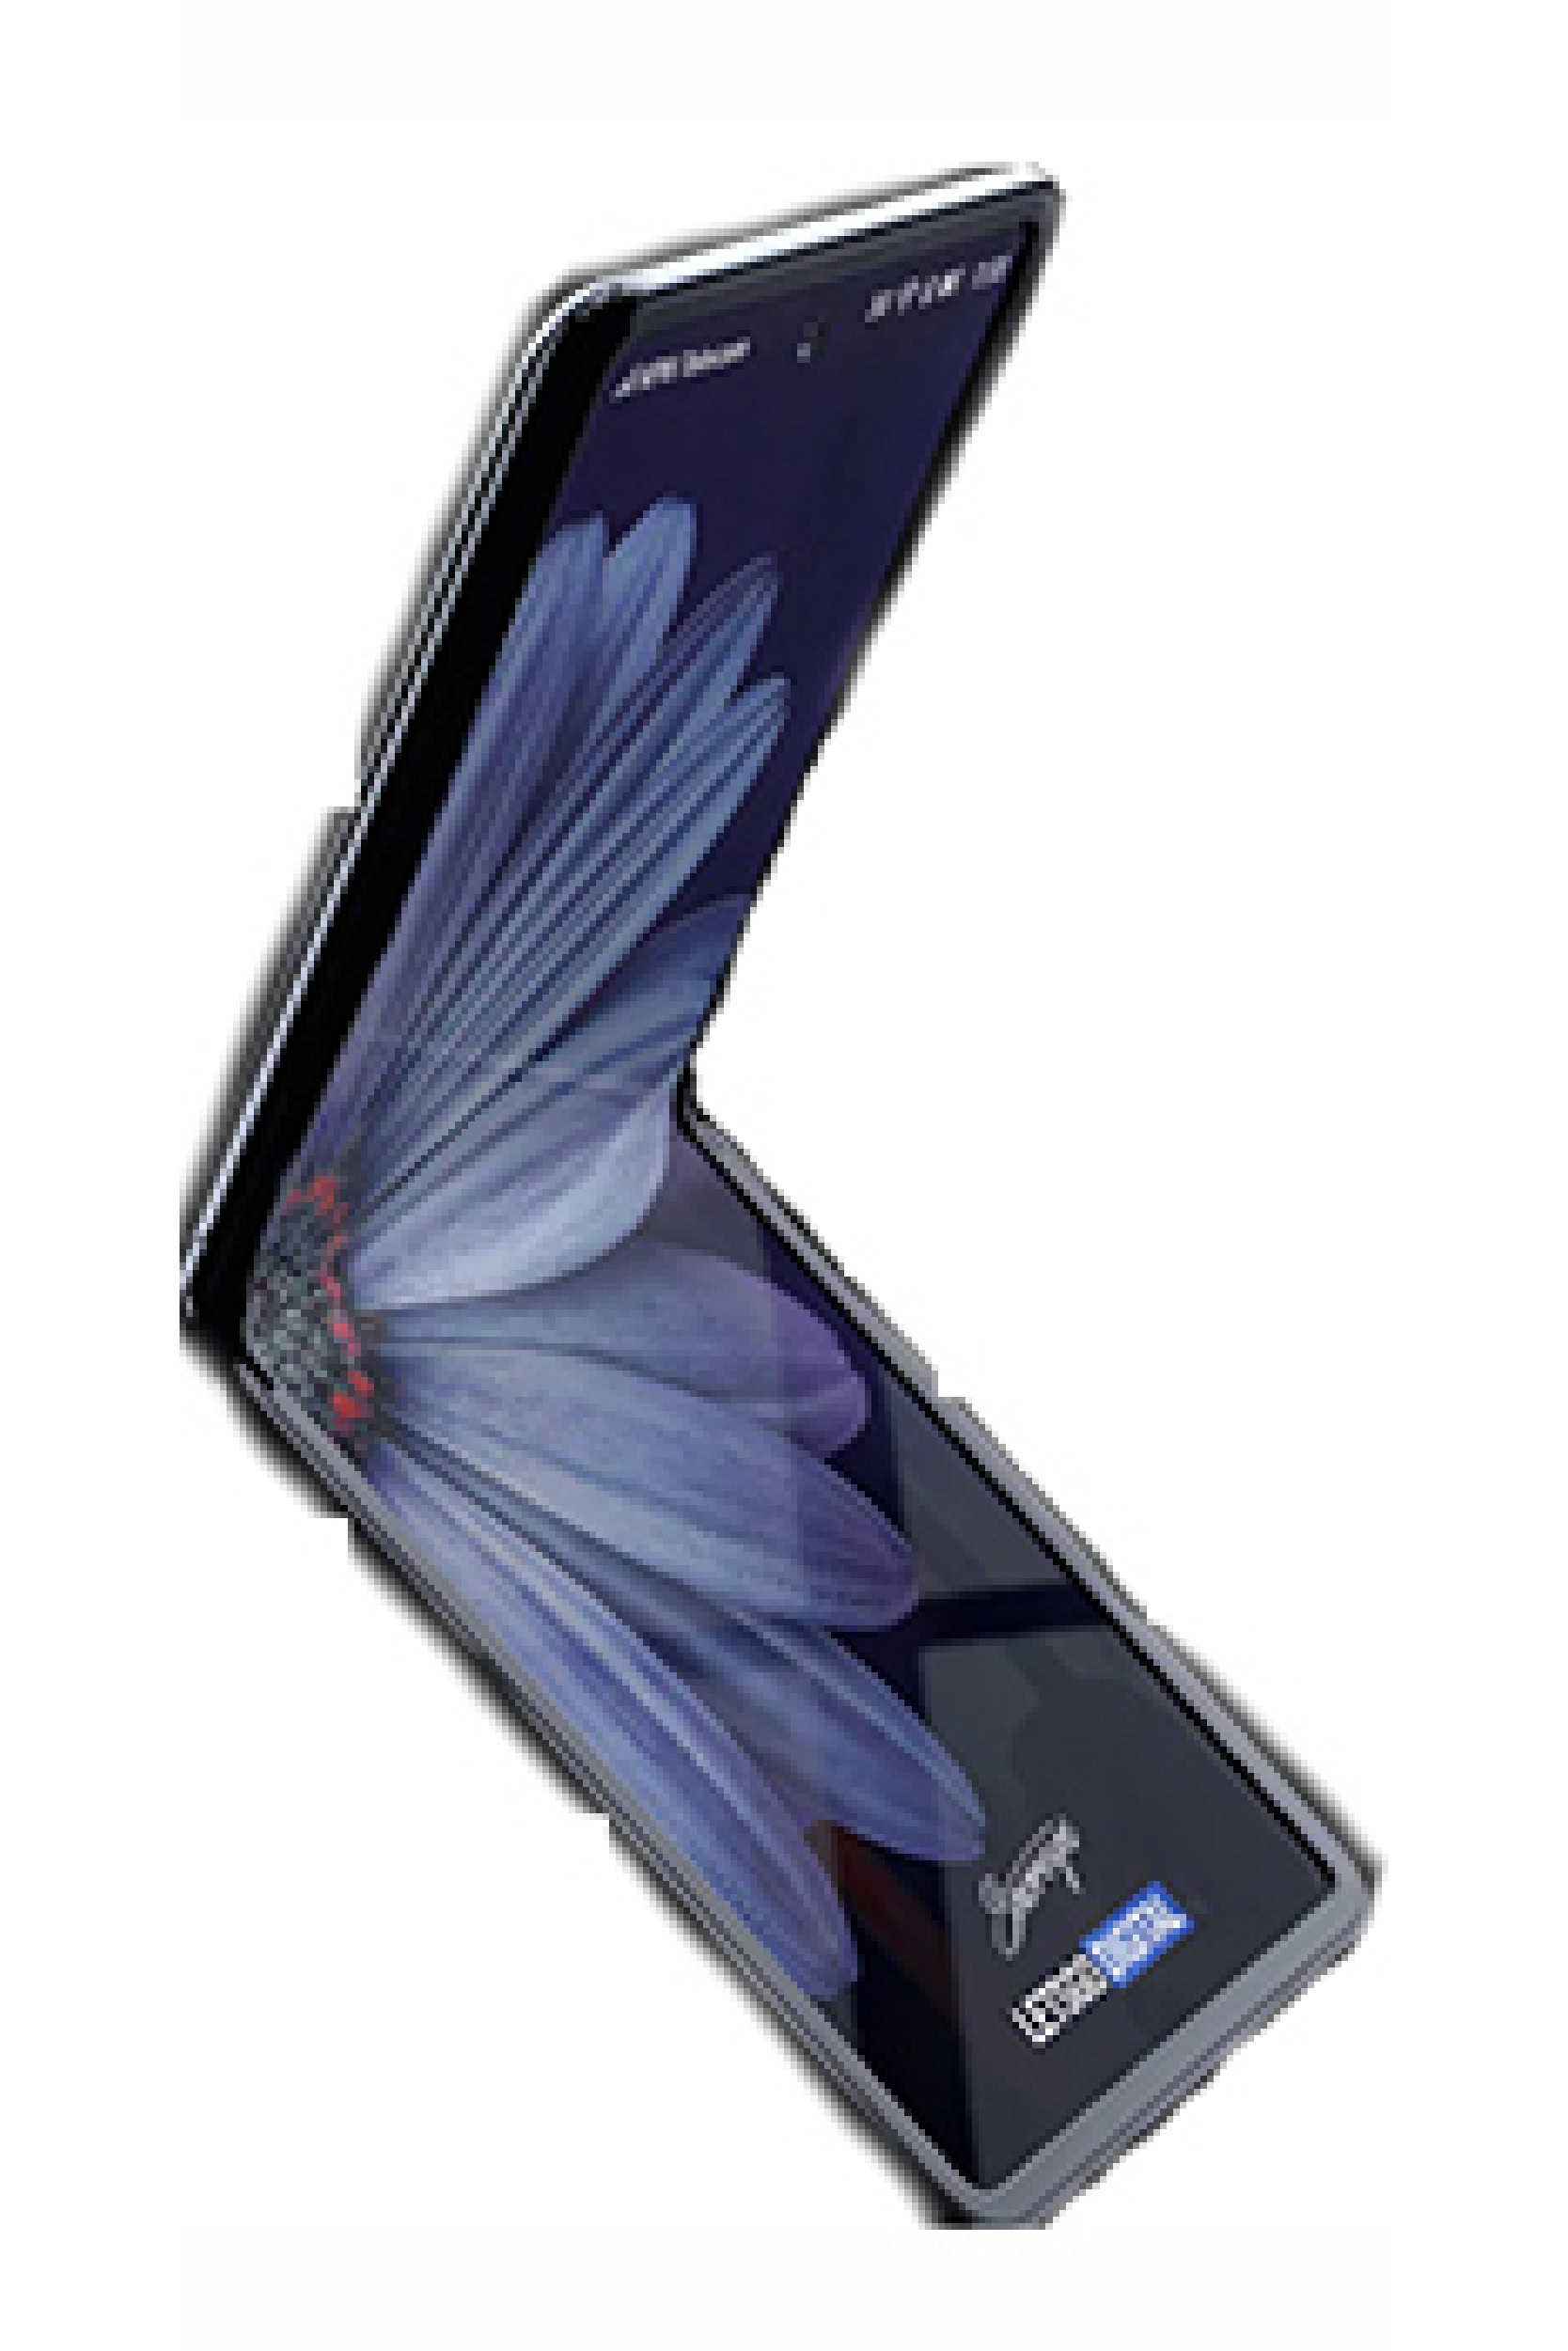 Samsung New Smart Flip Phone